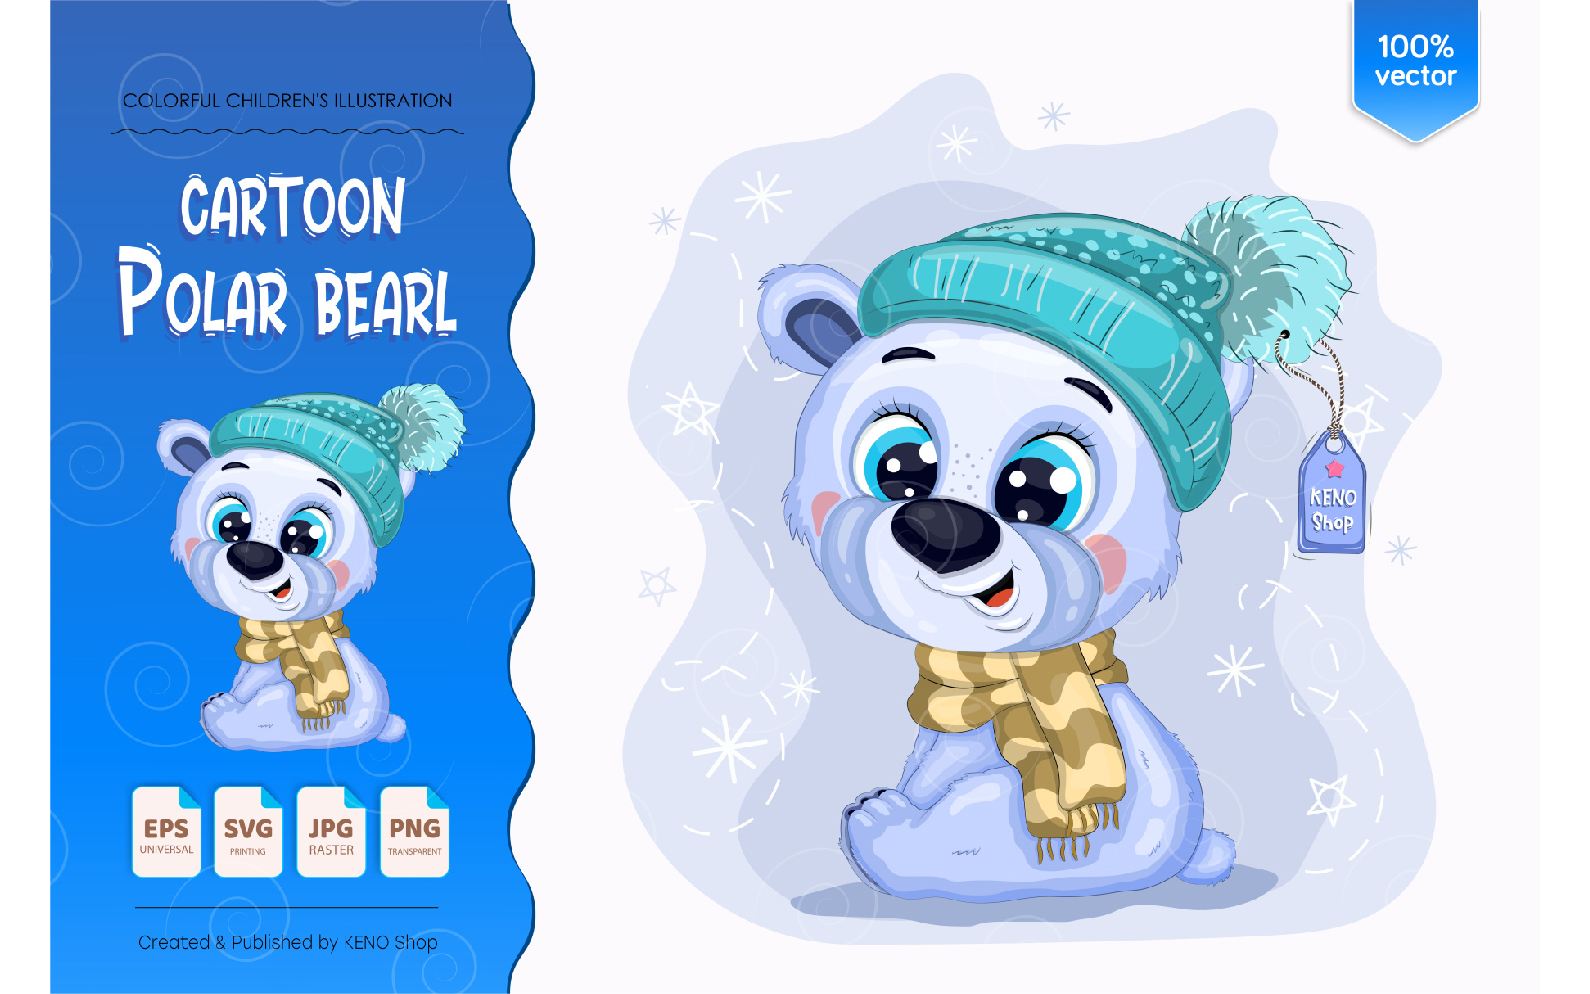 Cartoon Polar Bear - Vector Image